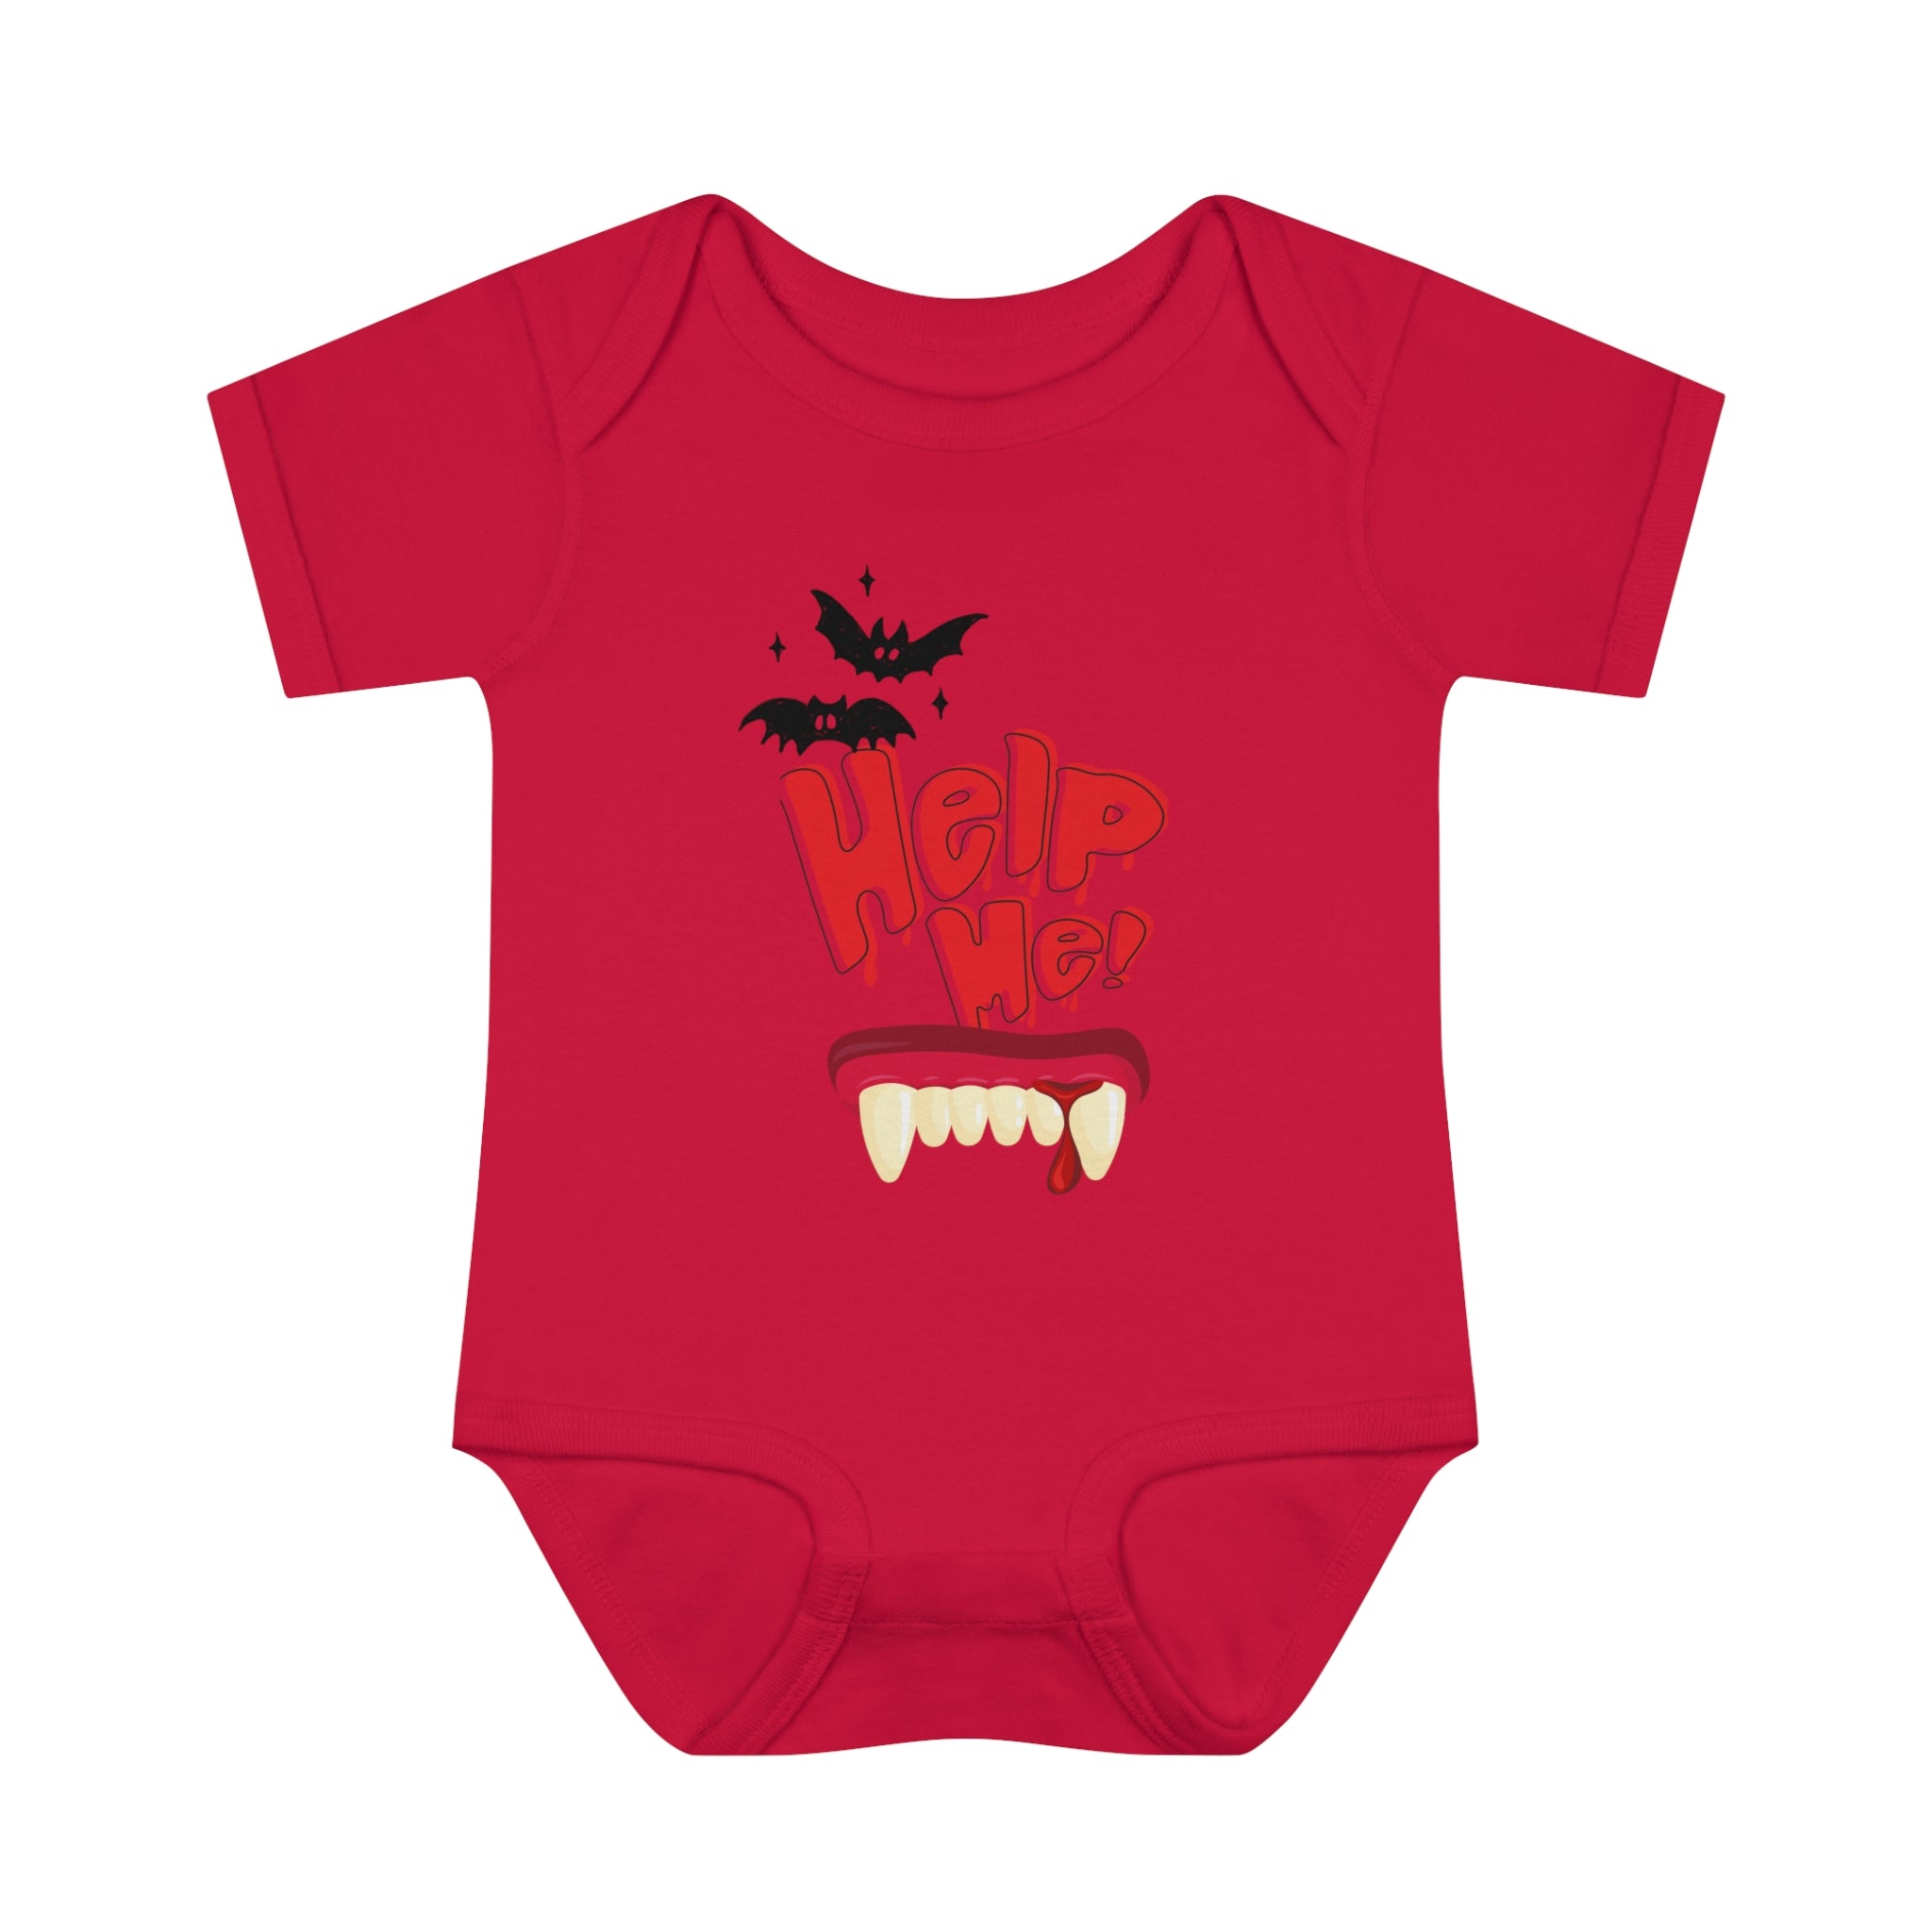 Help Me Vampire Bat Halloween Infant Baby Rib Bodysuit (6M-18M)